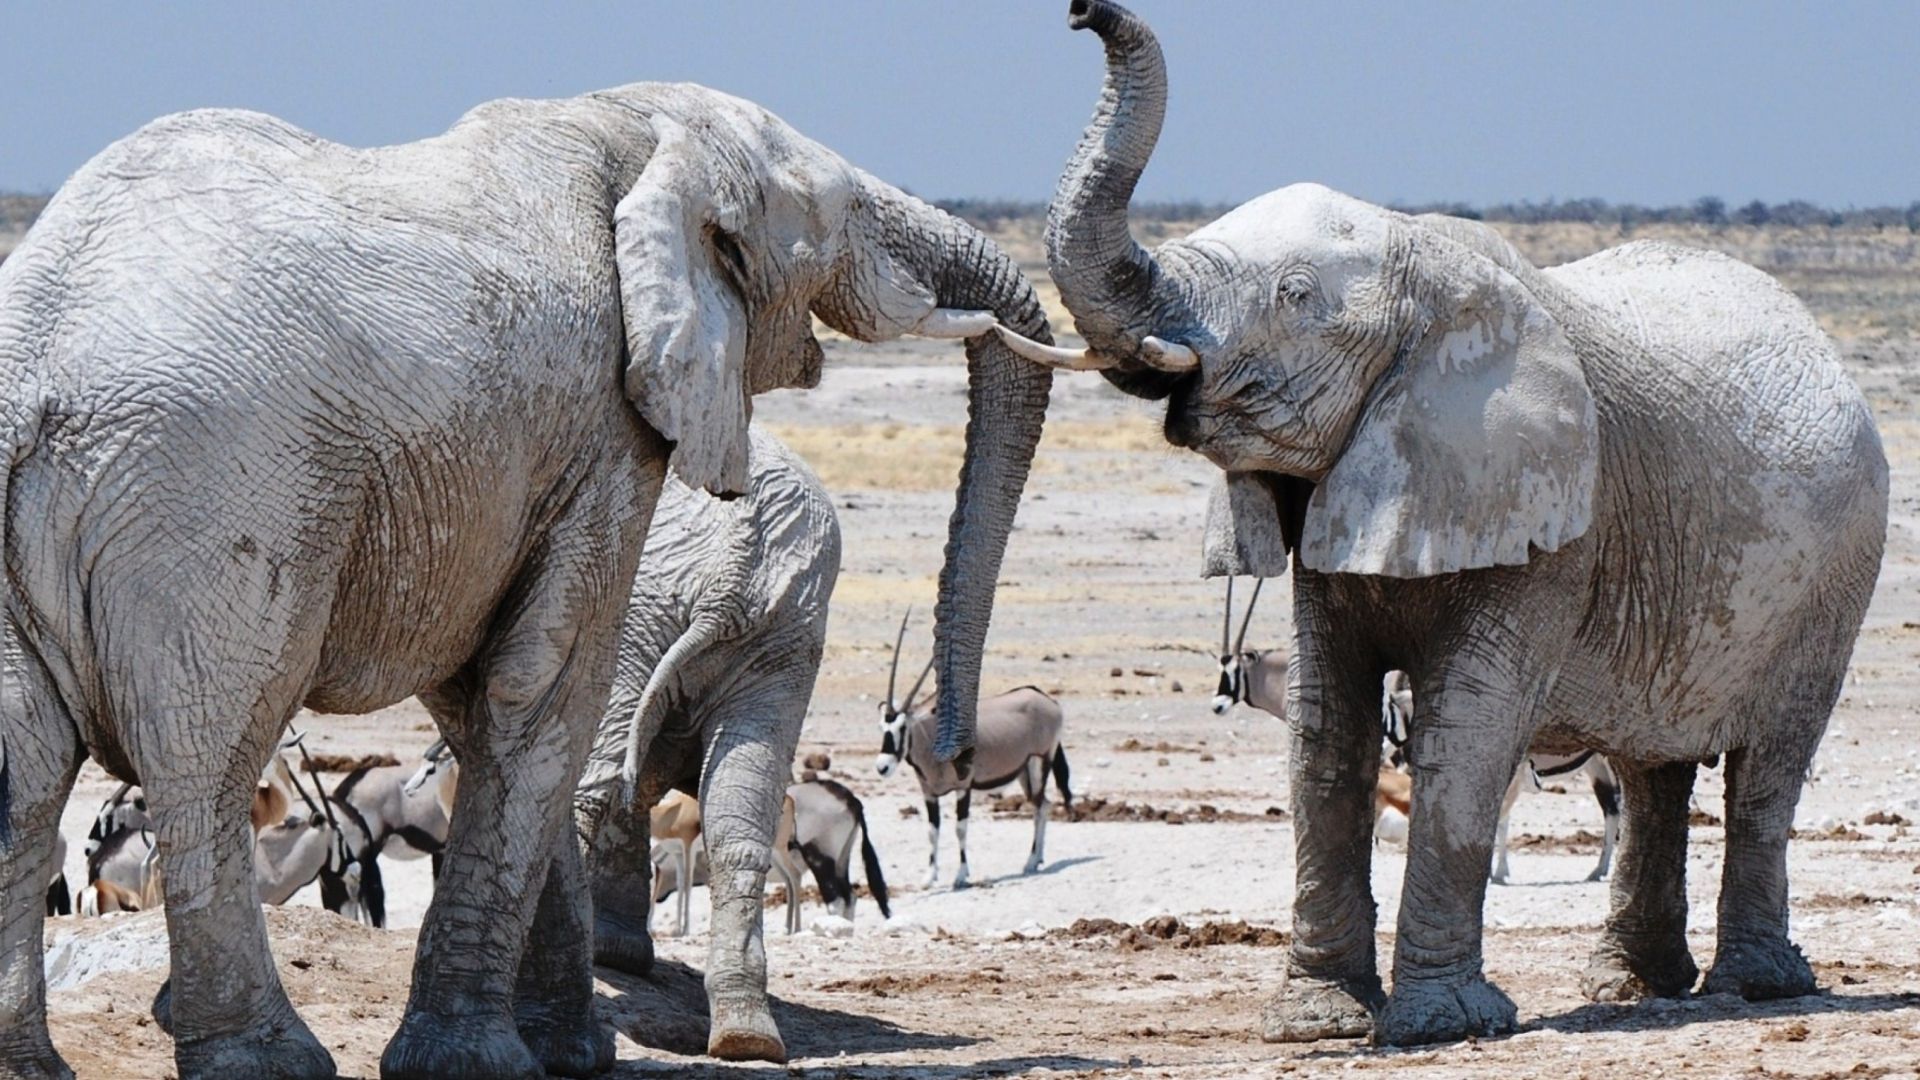 Interesting Photo Of The Elephants